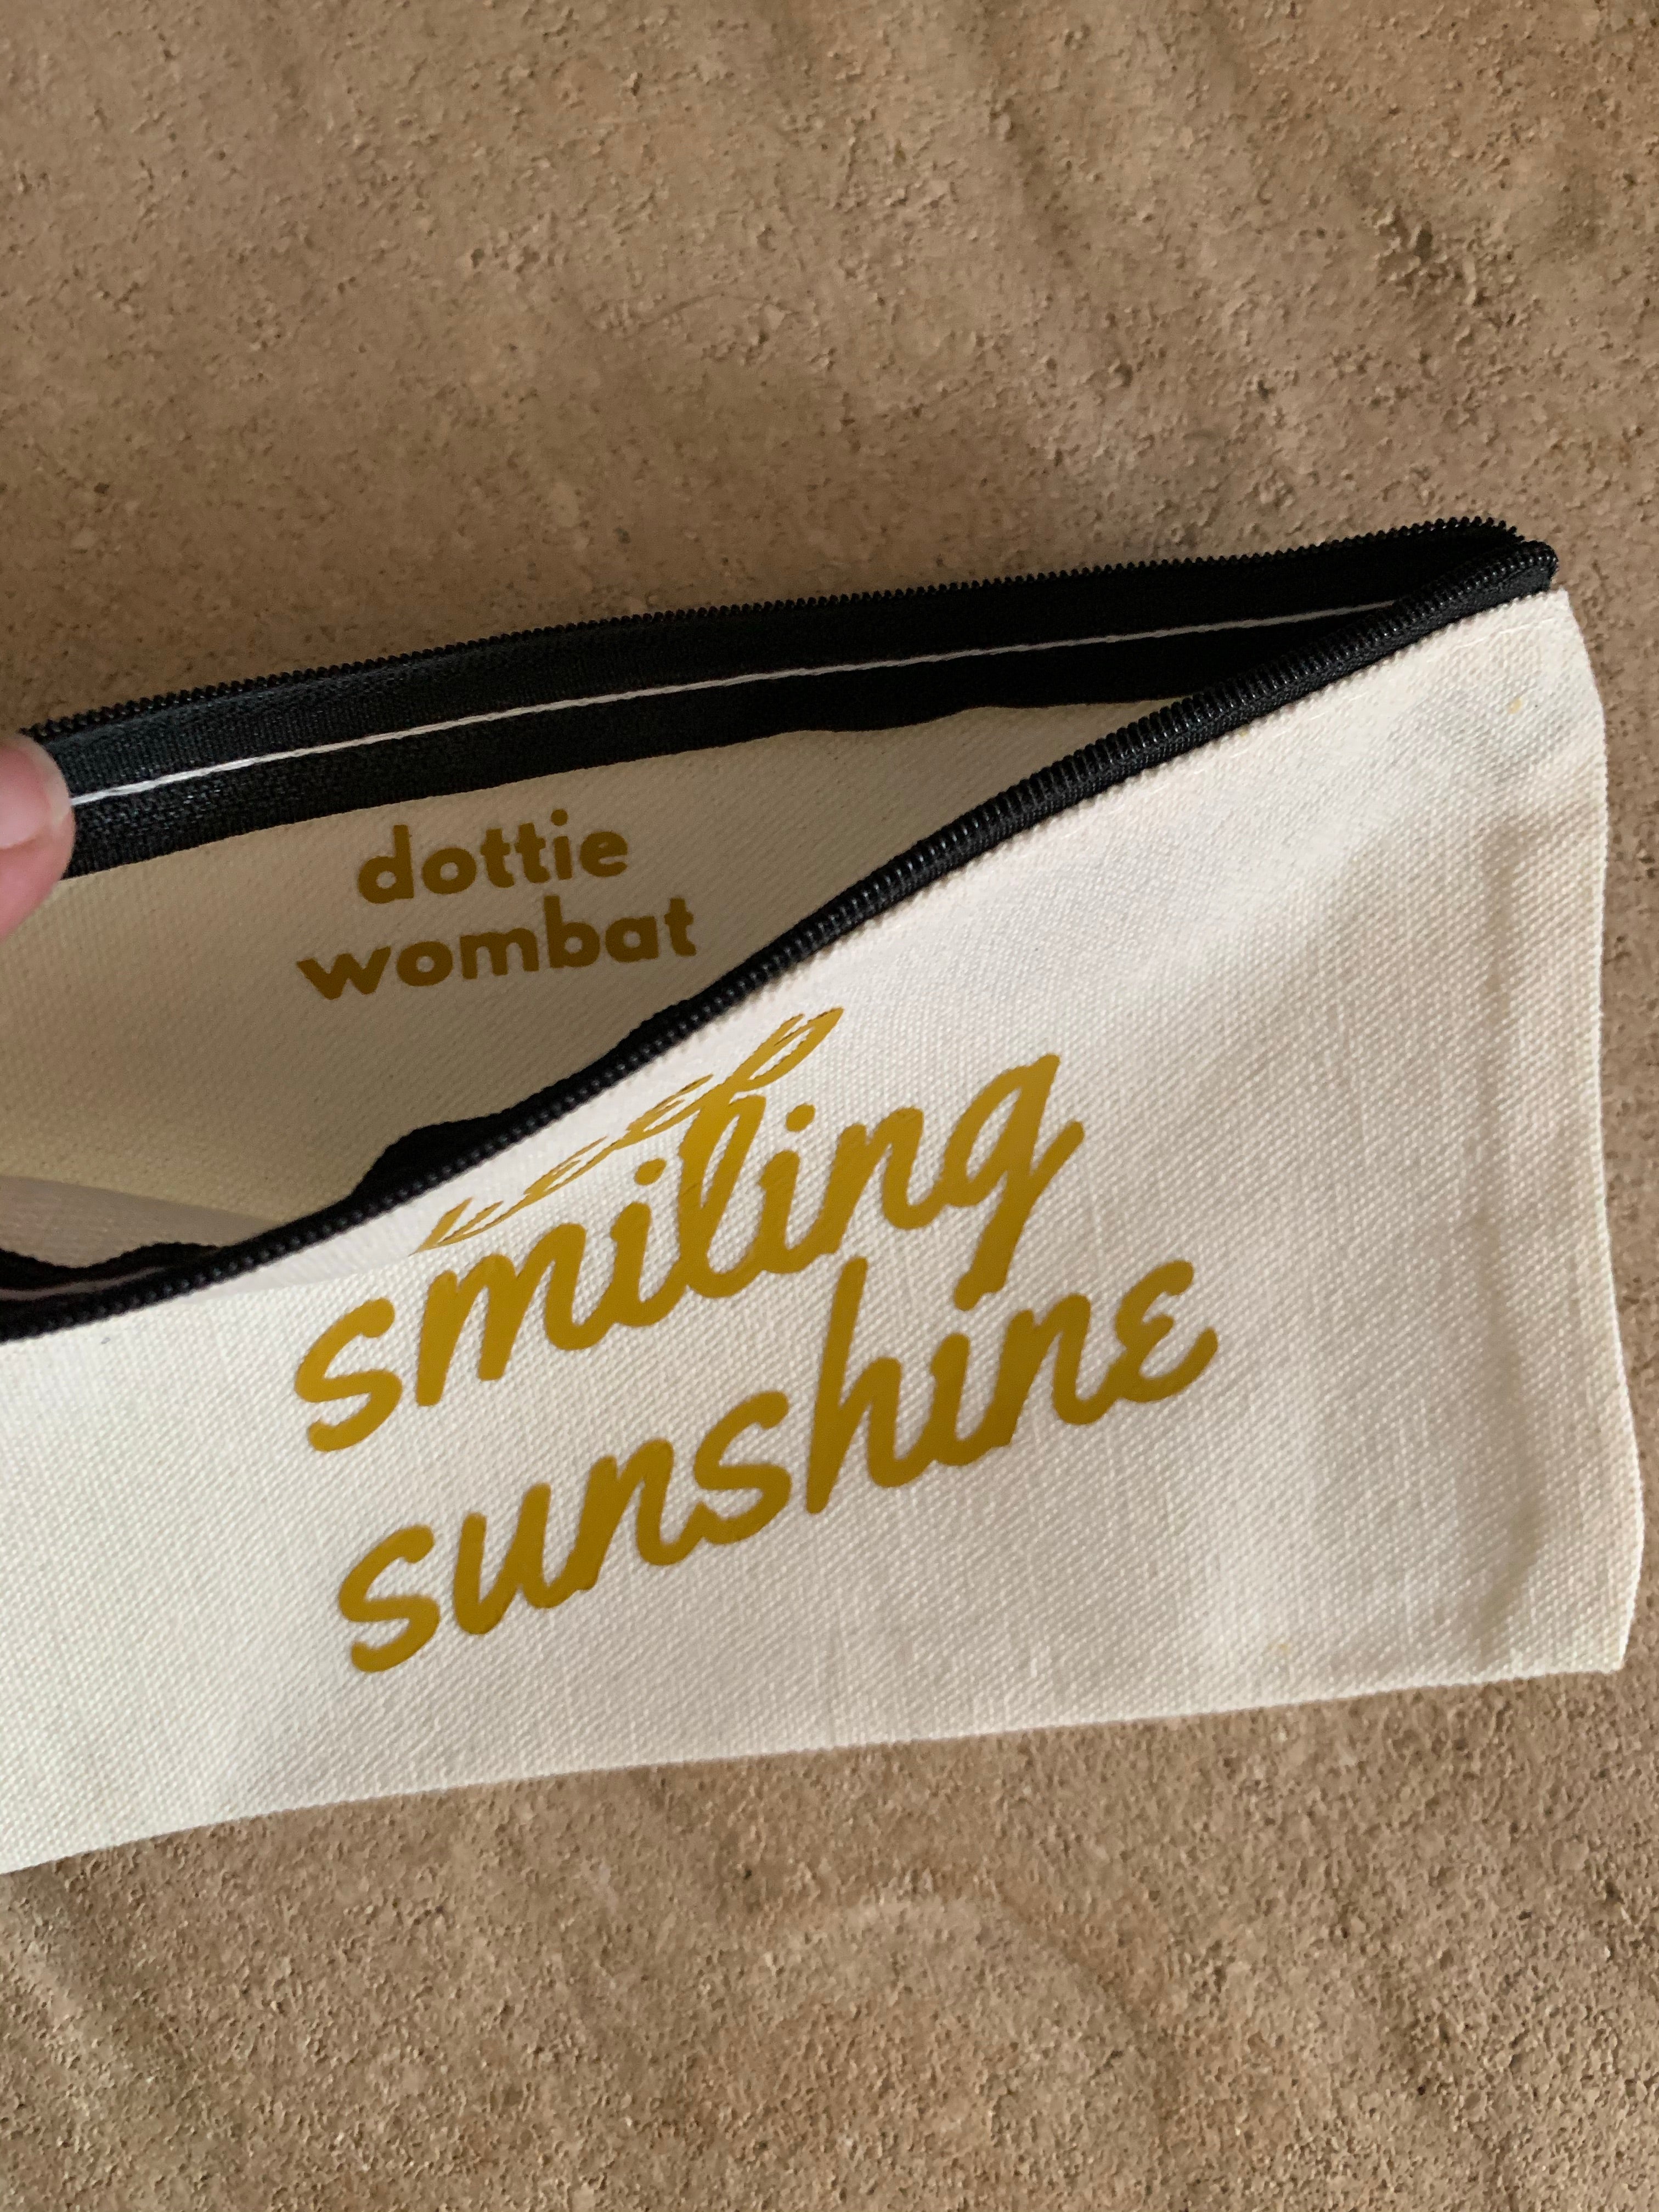 Canvas pouch /coin purse /pencil case /zip bag mustard vinyl  ‘keep smiling sunshine ’